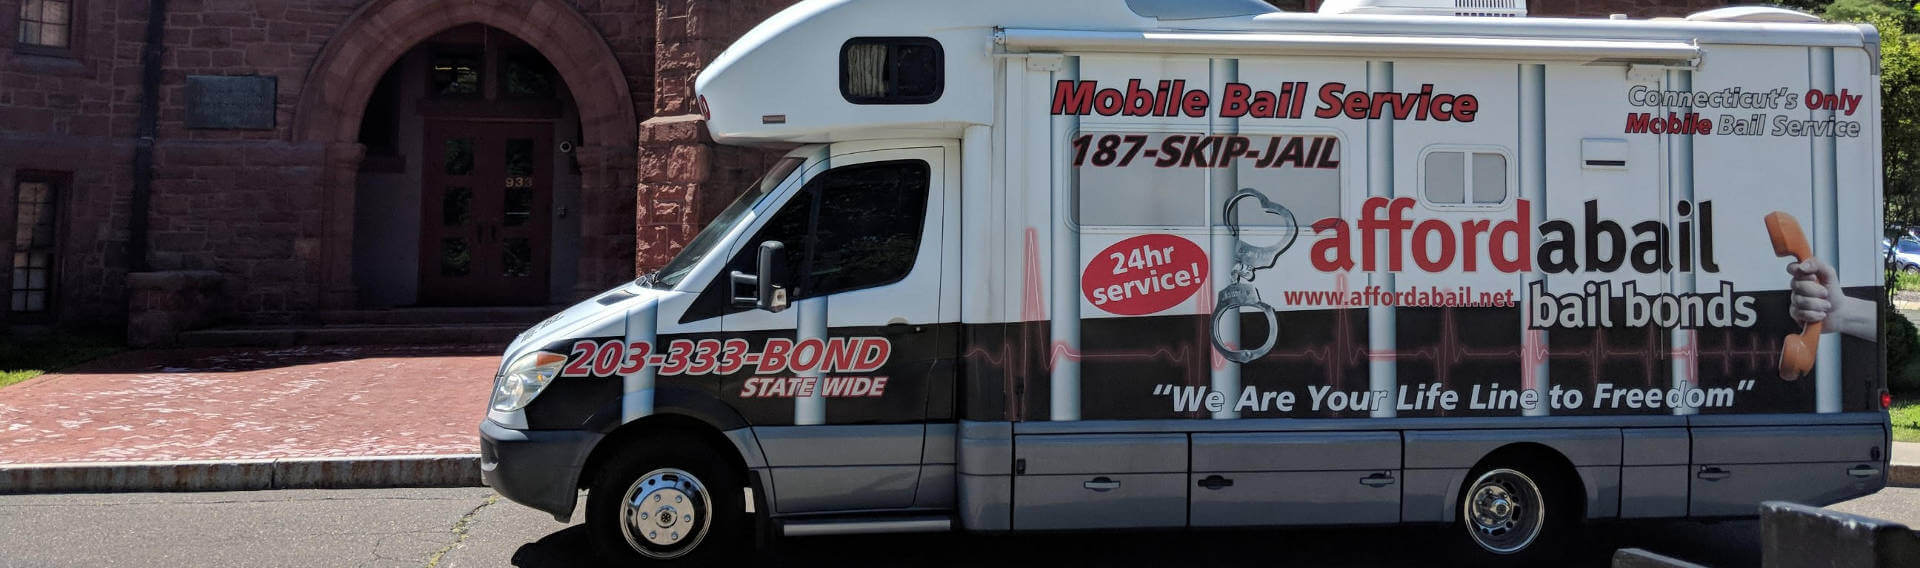 Mobile bail bonds service in Litchfield CT